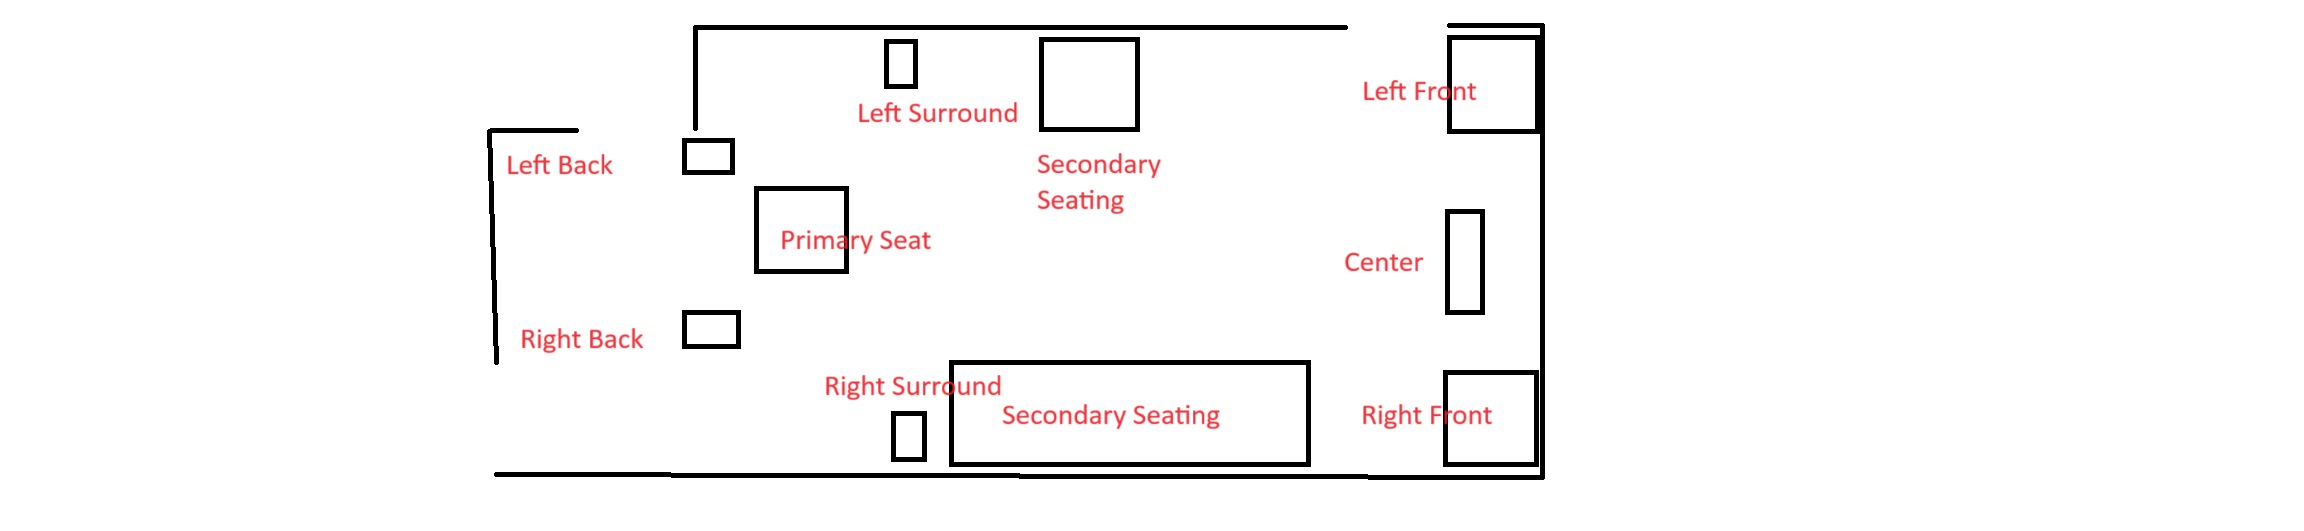 floor plan 1a.jpg